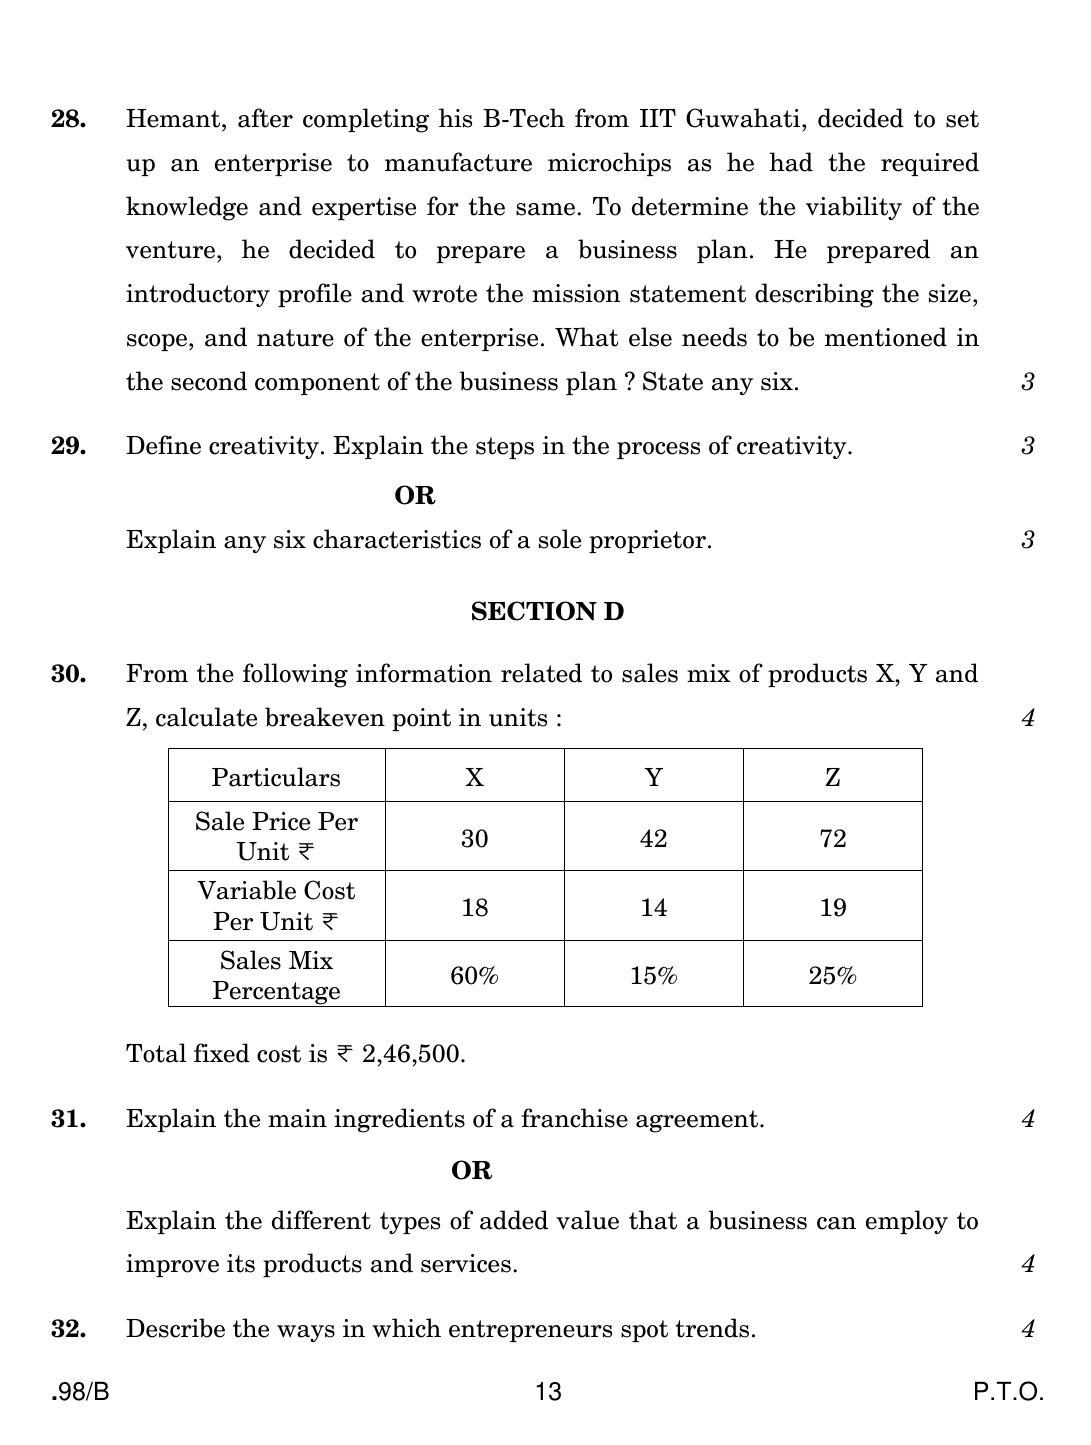 CBSE Class 12 Entrepreneurship 2020 Compartment Question Paper - Page 13